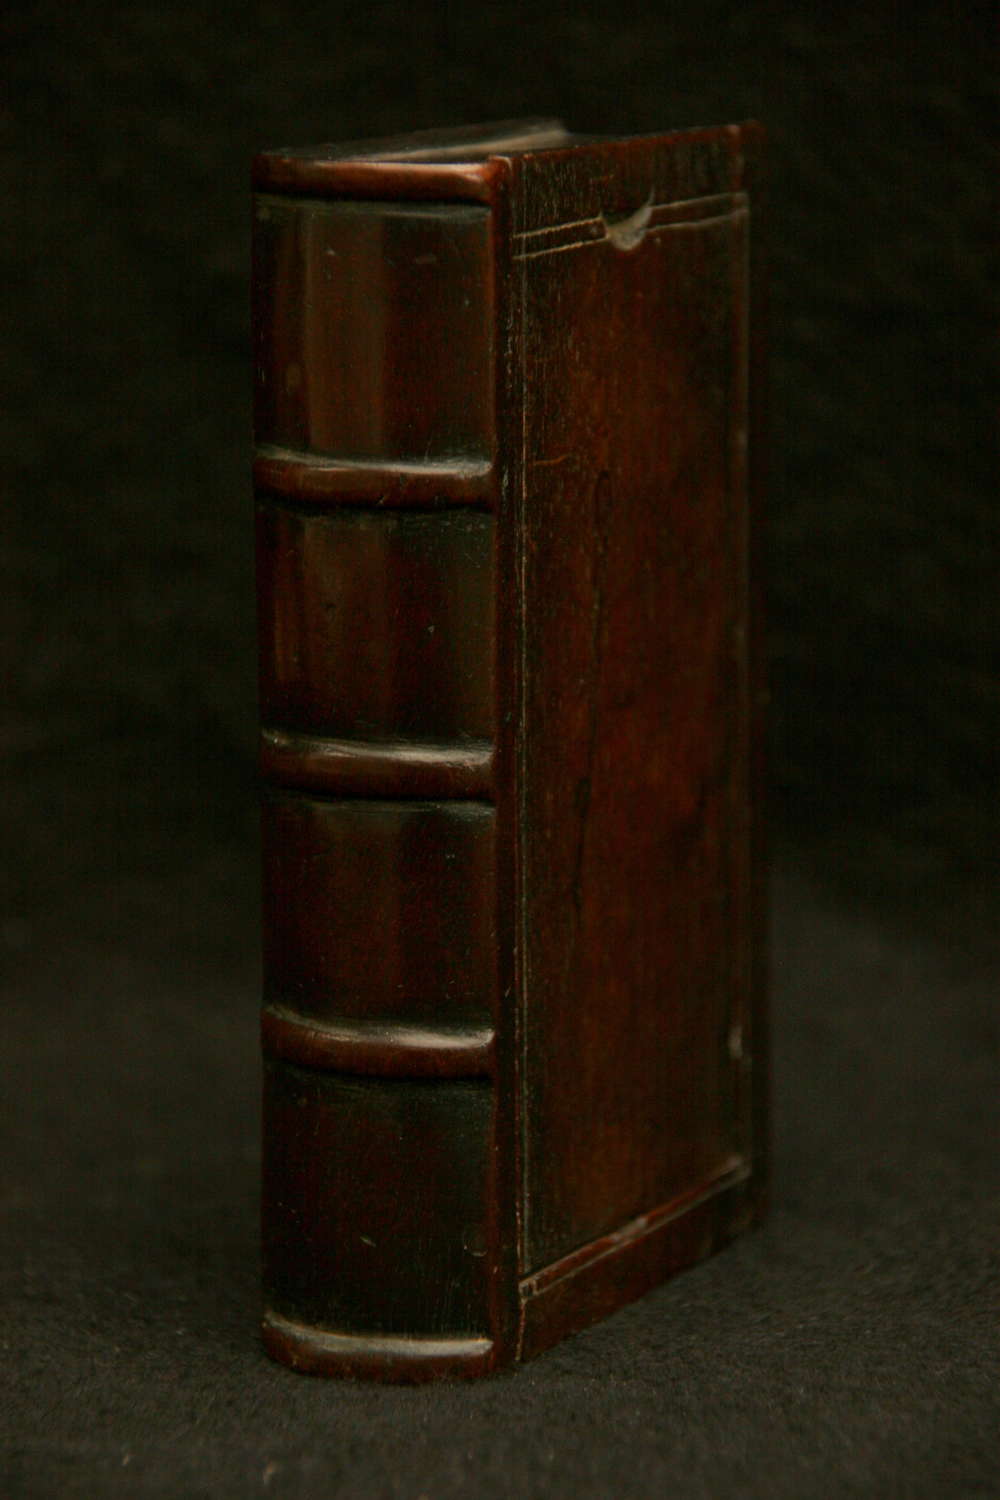 Treen Book Box form Snuff Box  19th century